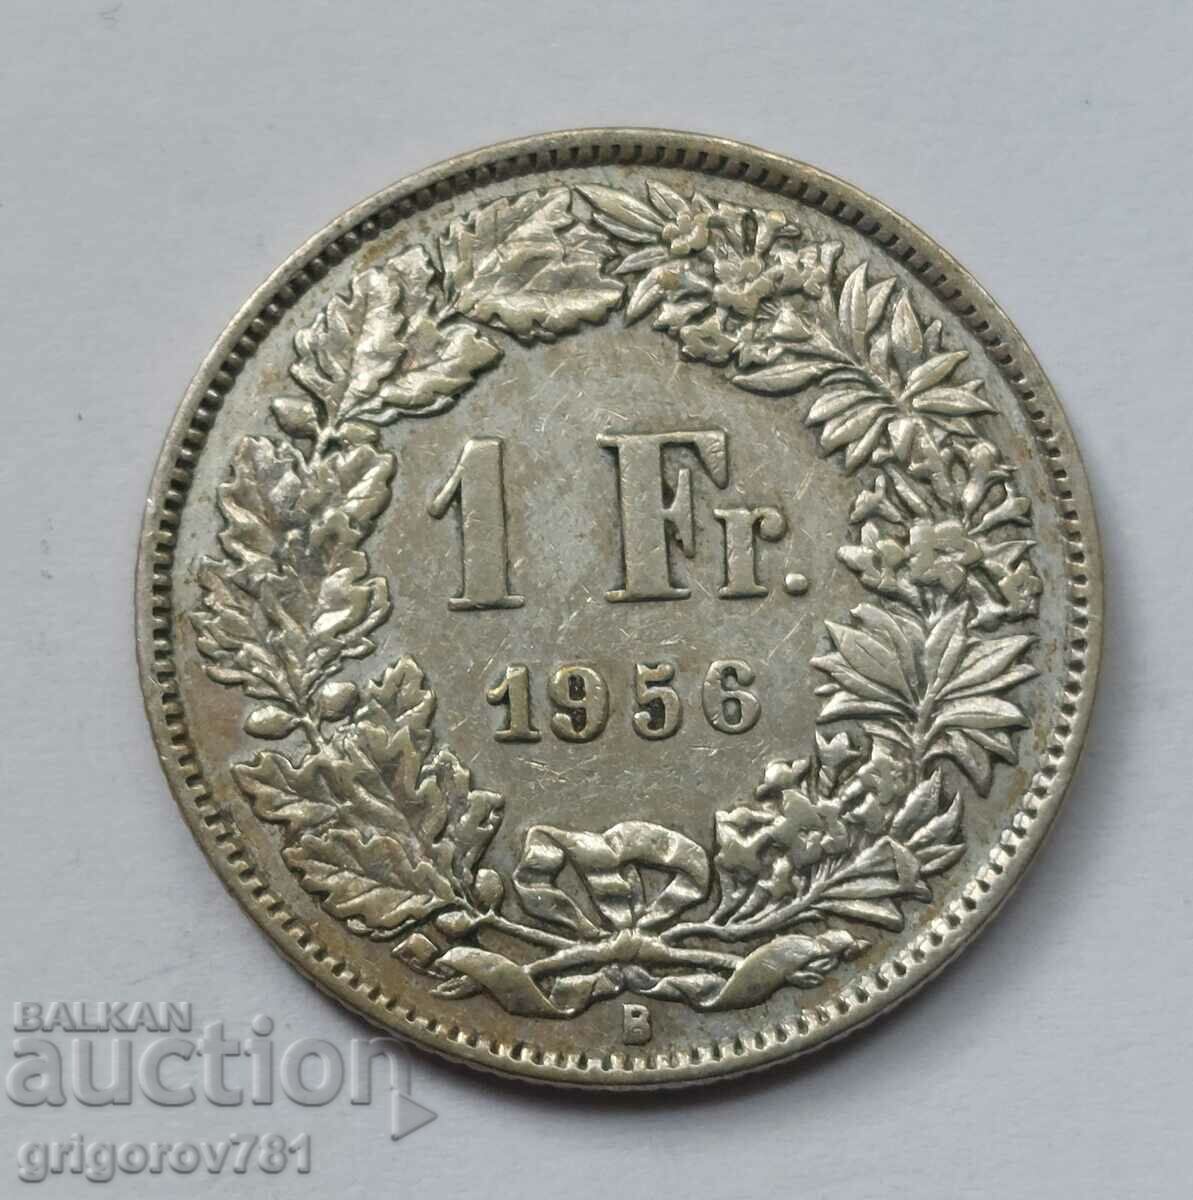 1 Franc Silver Switzerland 1956 B - Silver Coin #20